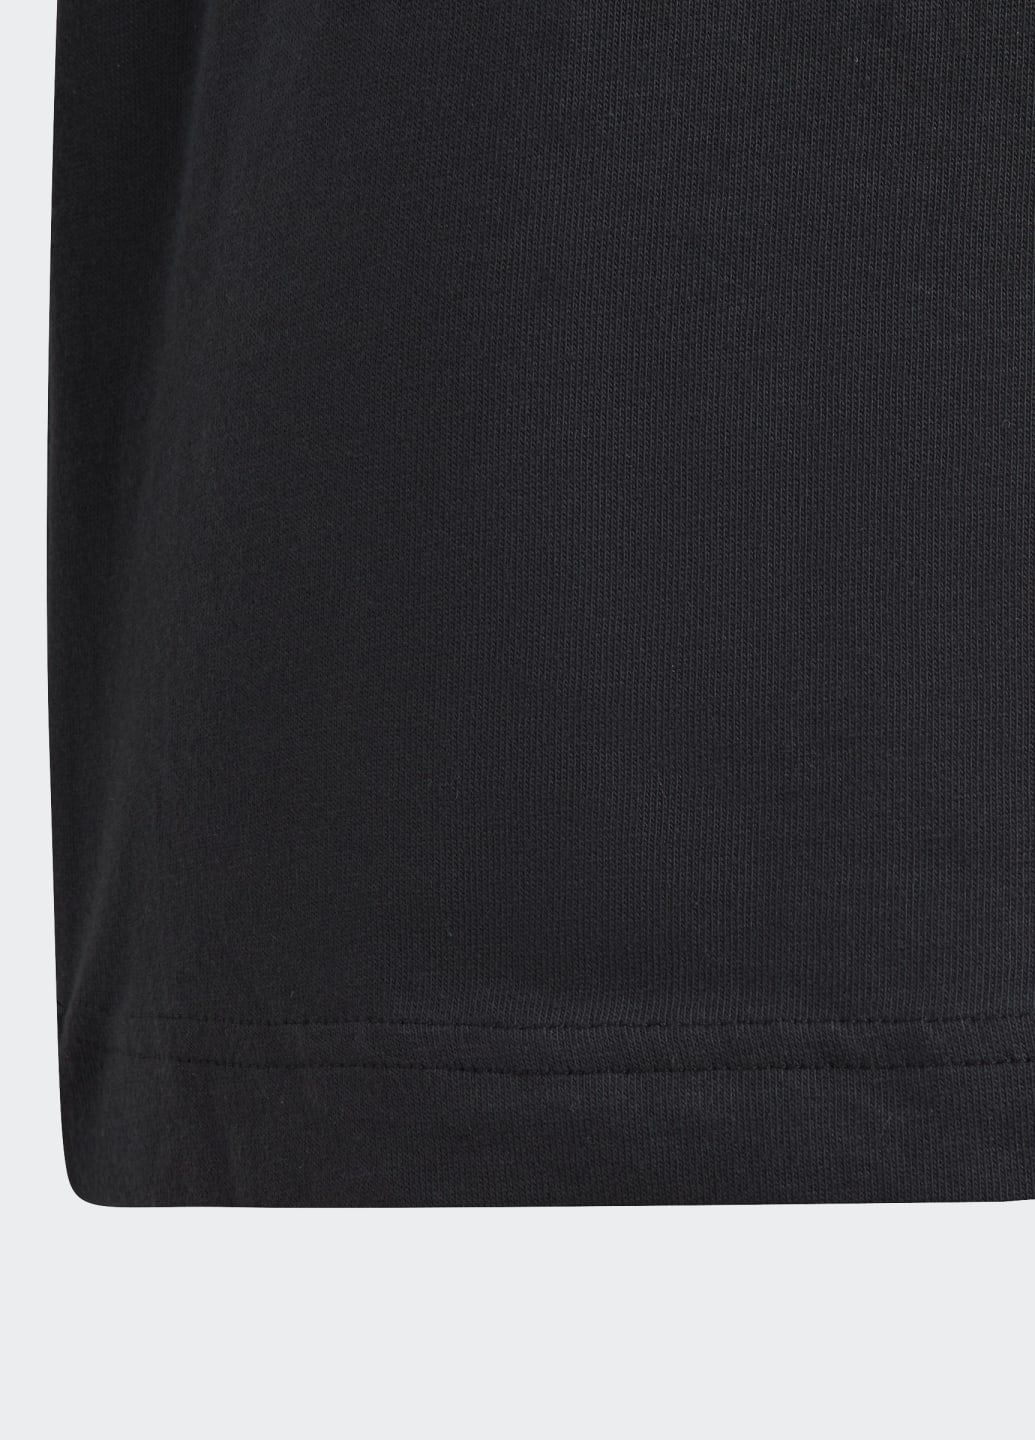 Черная демисезонная футболка future icons 3-stripes adidas